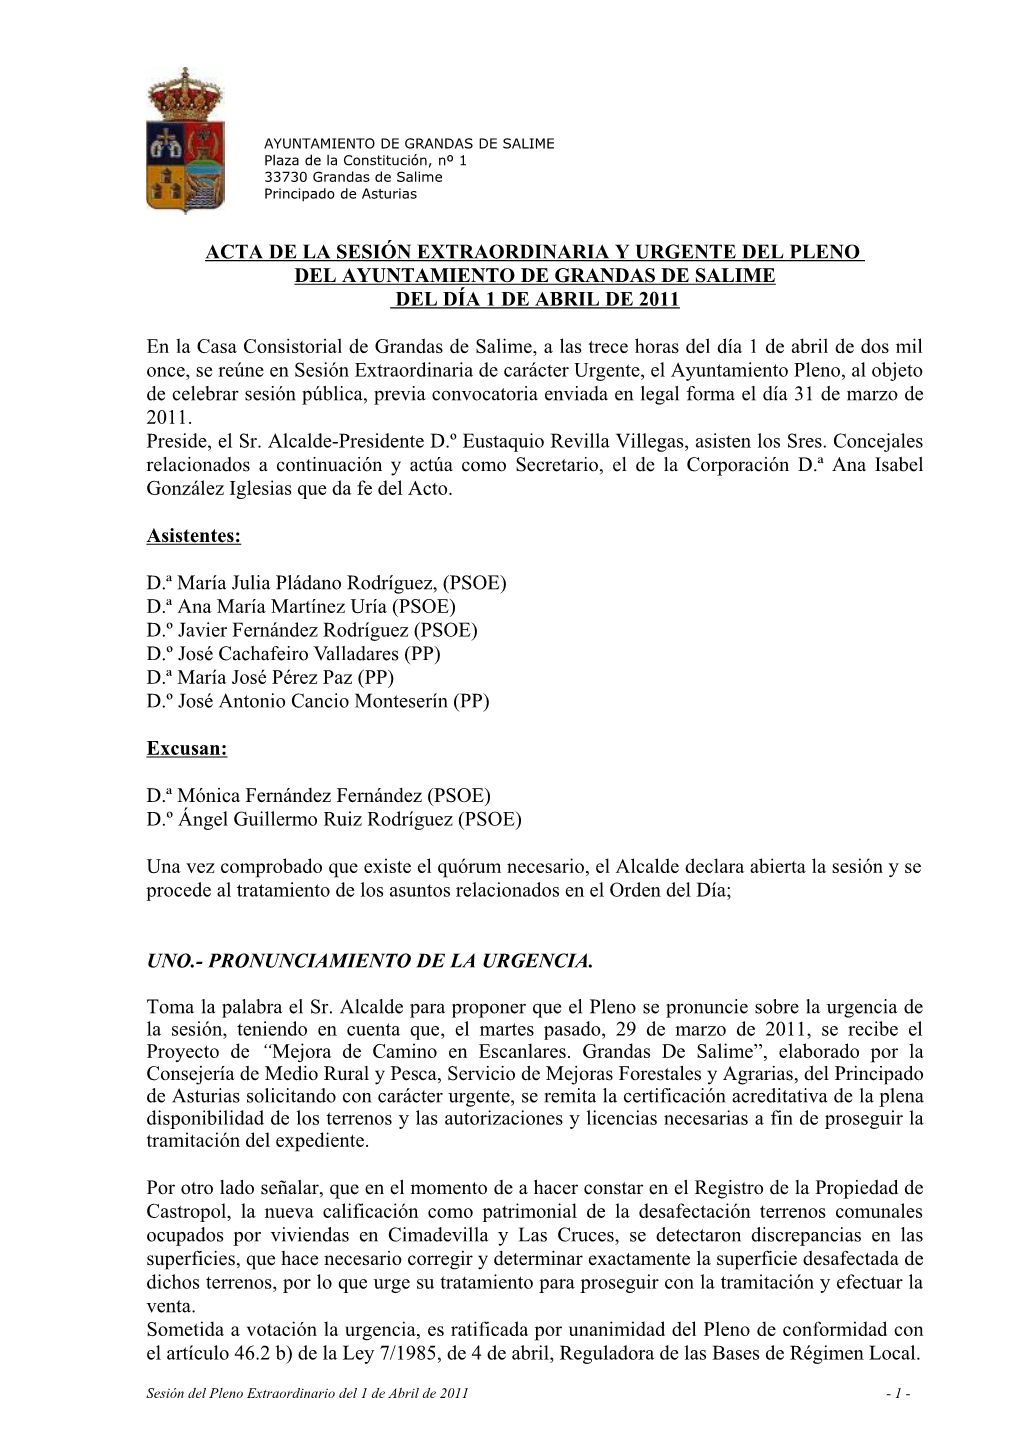 06 ACTA Pleno Extra Urgente 1 De Abril 2011